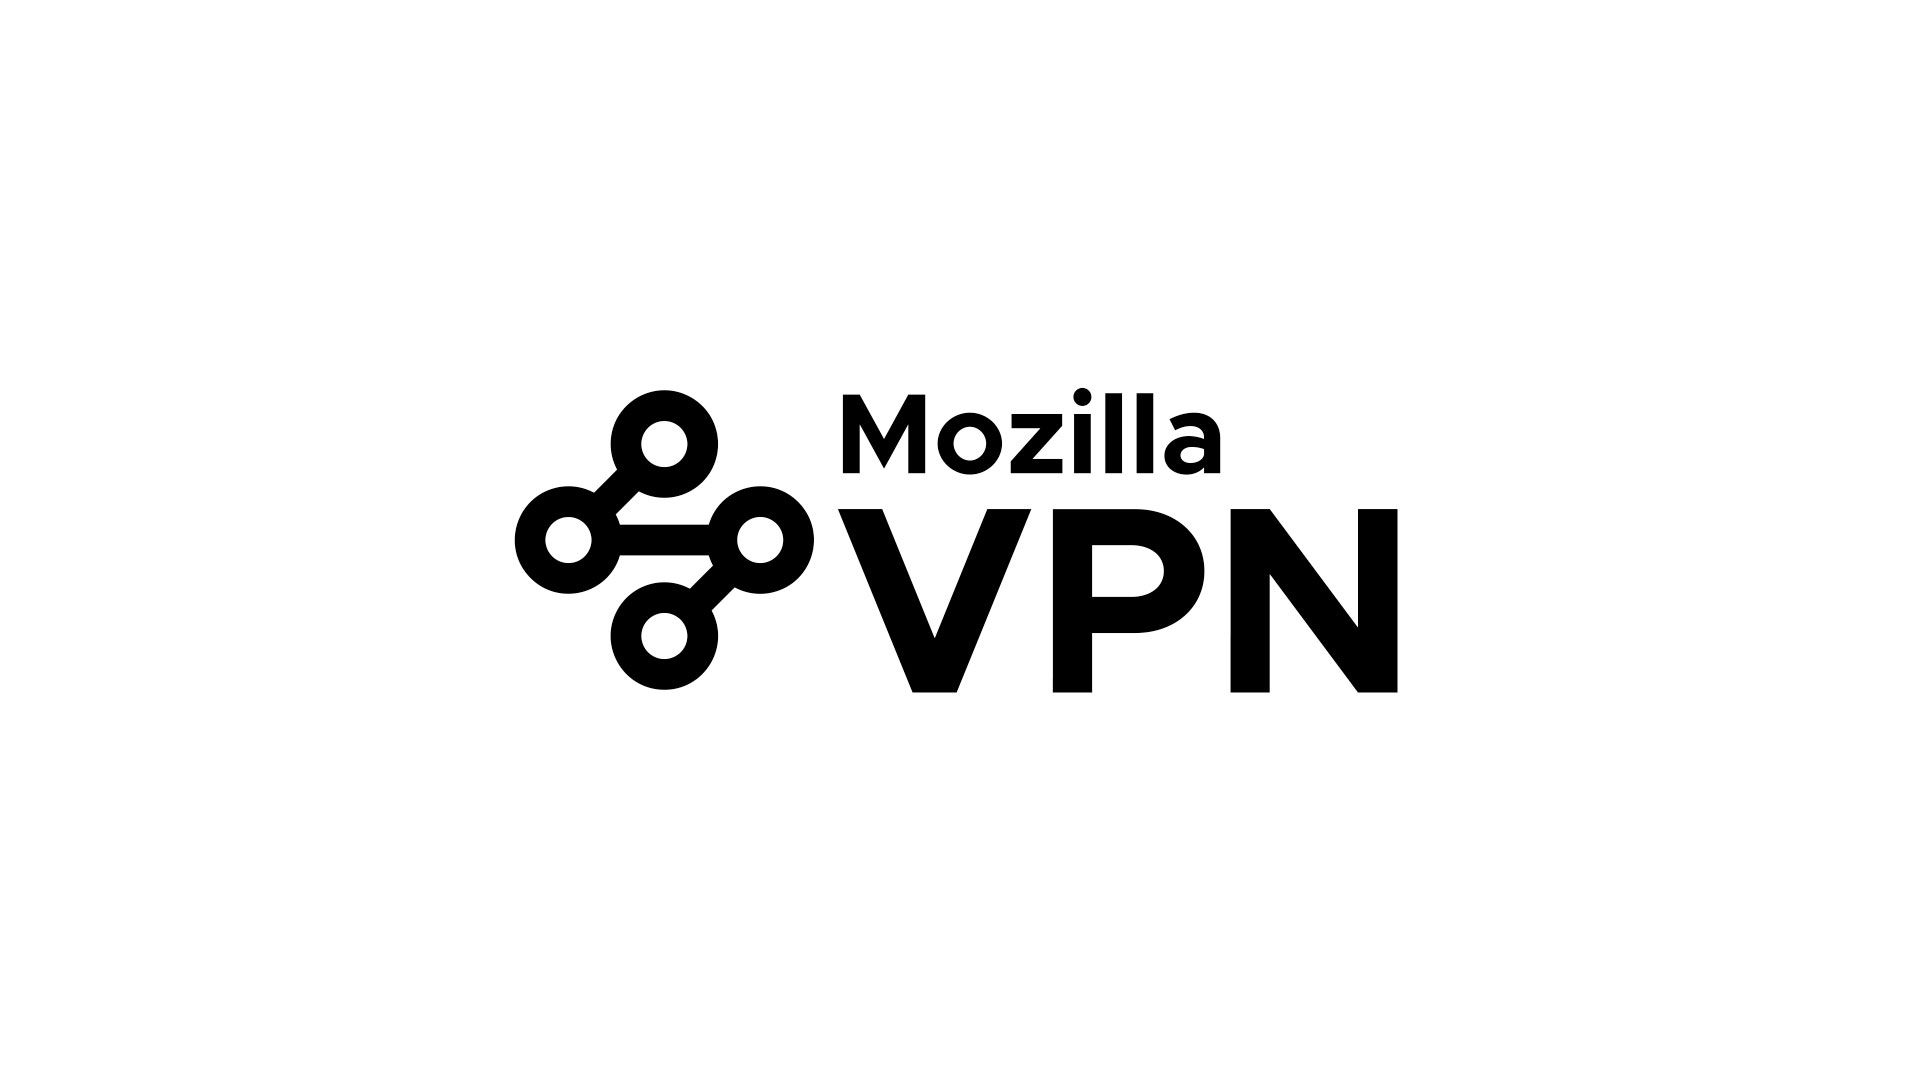 Mozilla VPN em um fundo branco